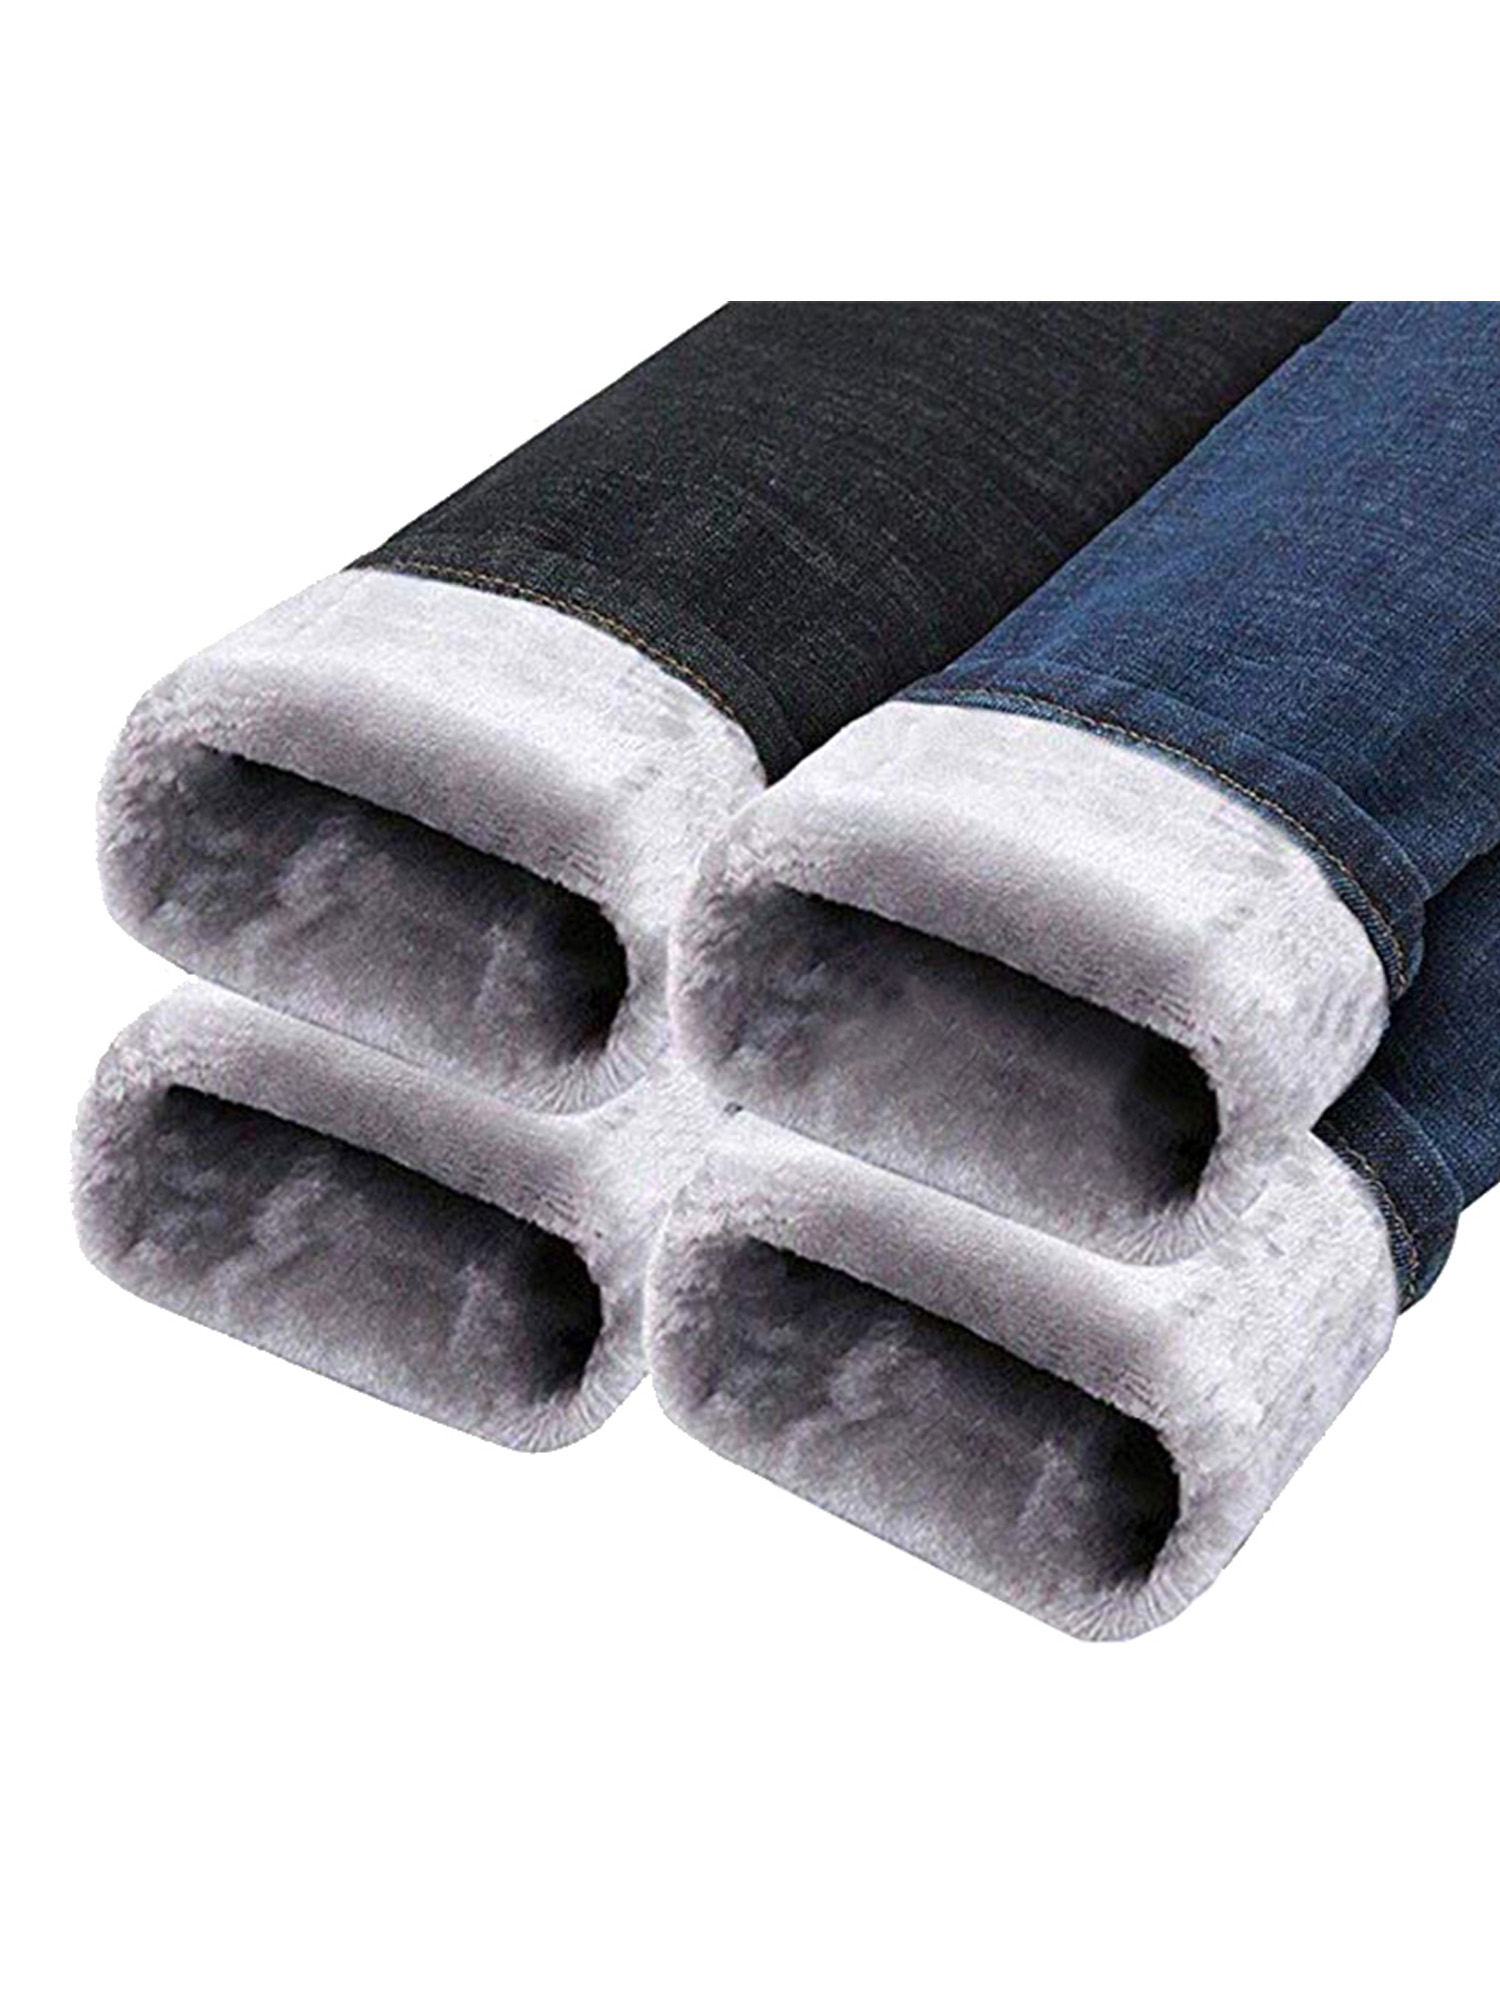 Listenwind Womens Warm Fleece Lined Jeans Stretch Skinny Winter Thick Jeggings Denim Long Pants Black - image 5 of 7